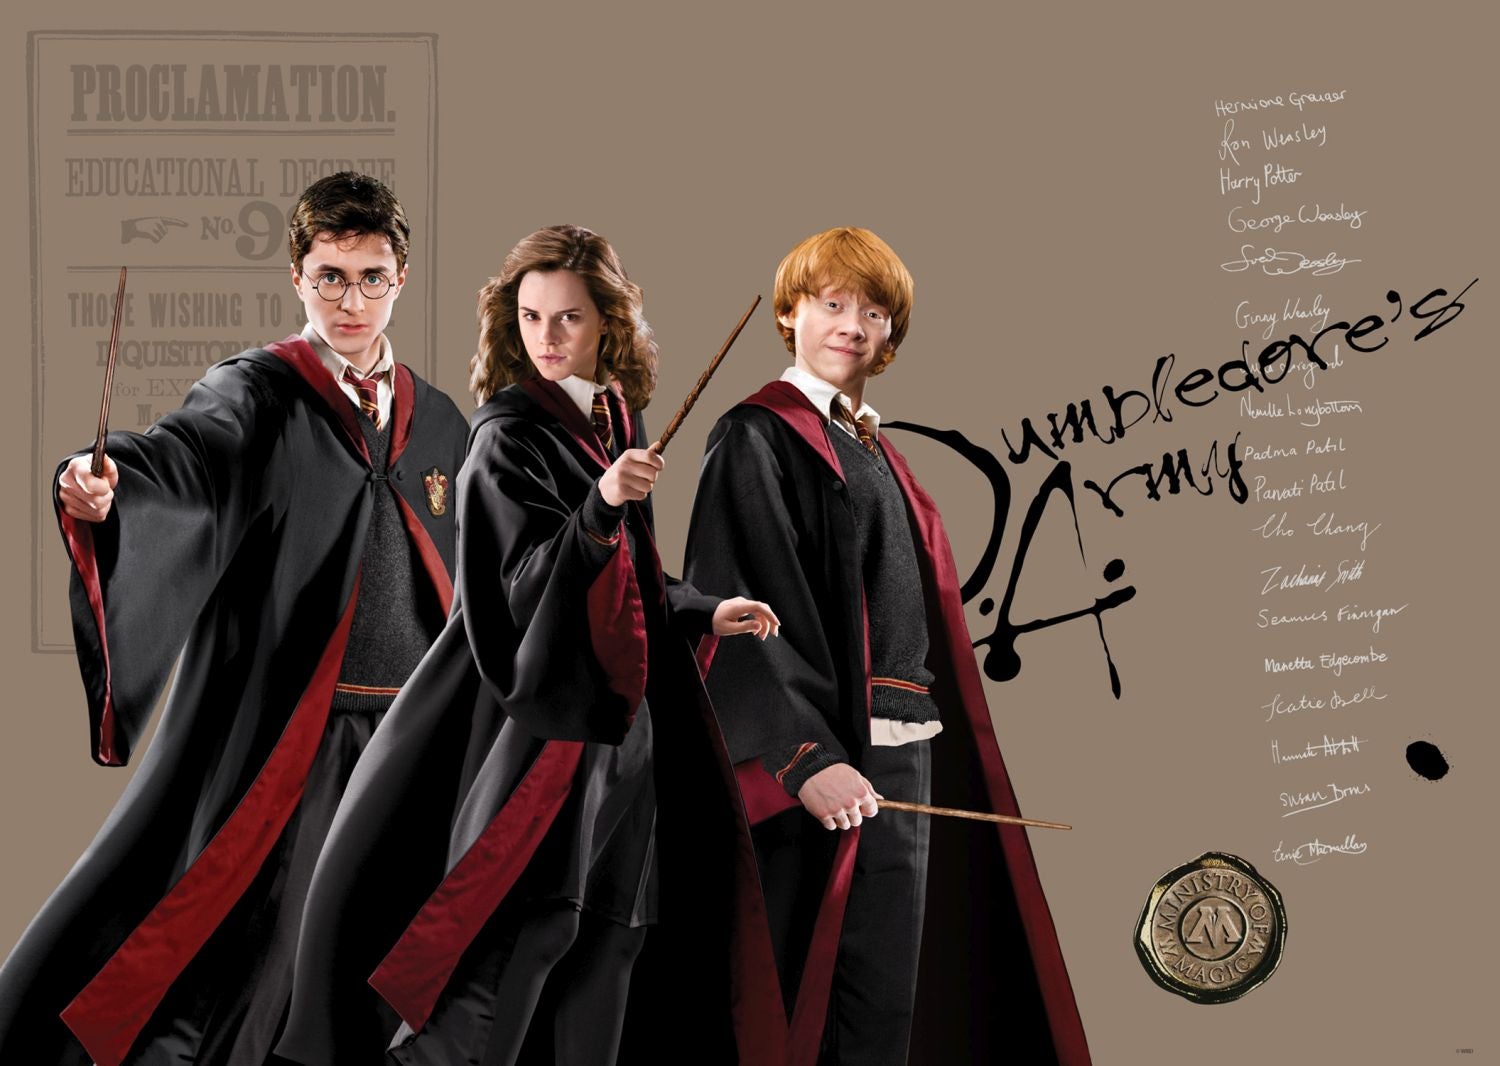 Poster Harry Potter, Hermione Granger, Ron Weasley beige, nero e rosso -  1.1 x 1.55 m - Sanders & Sanders